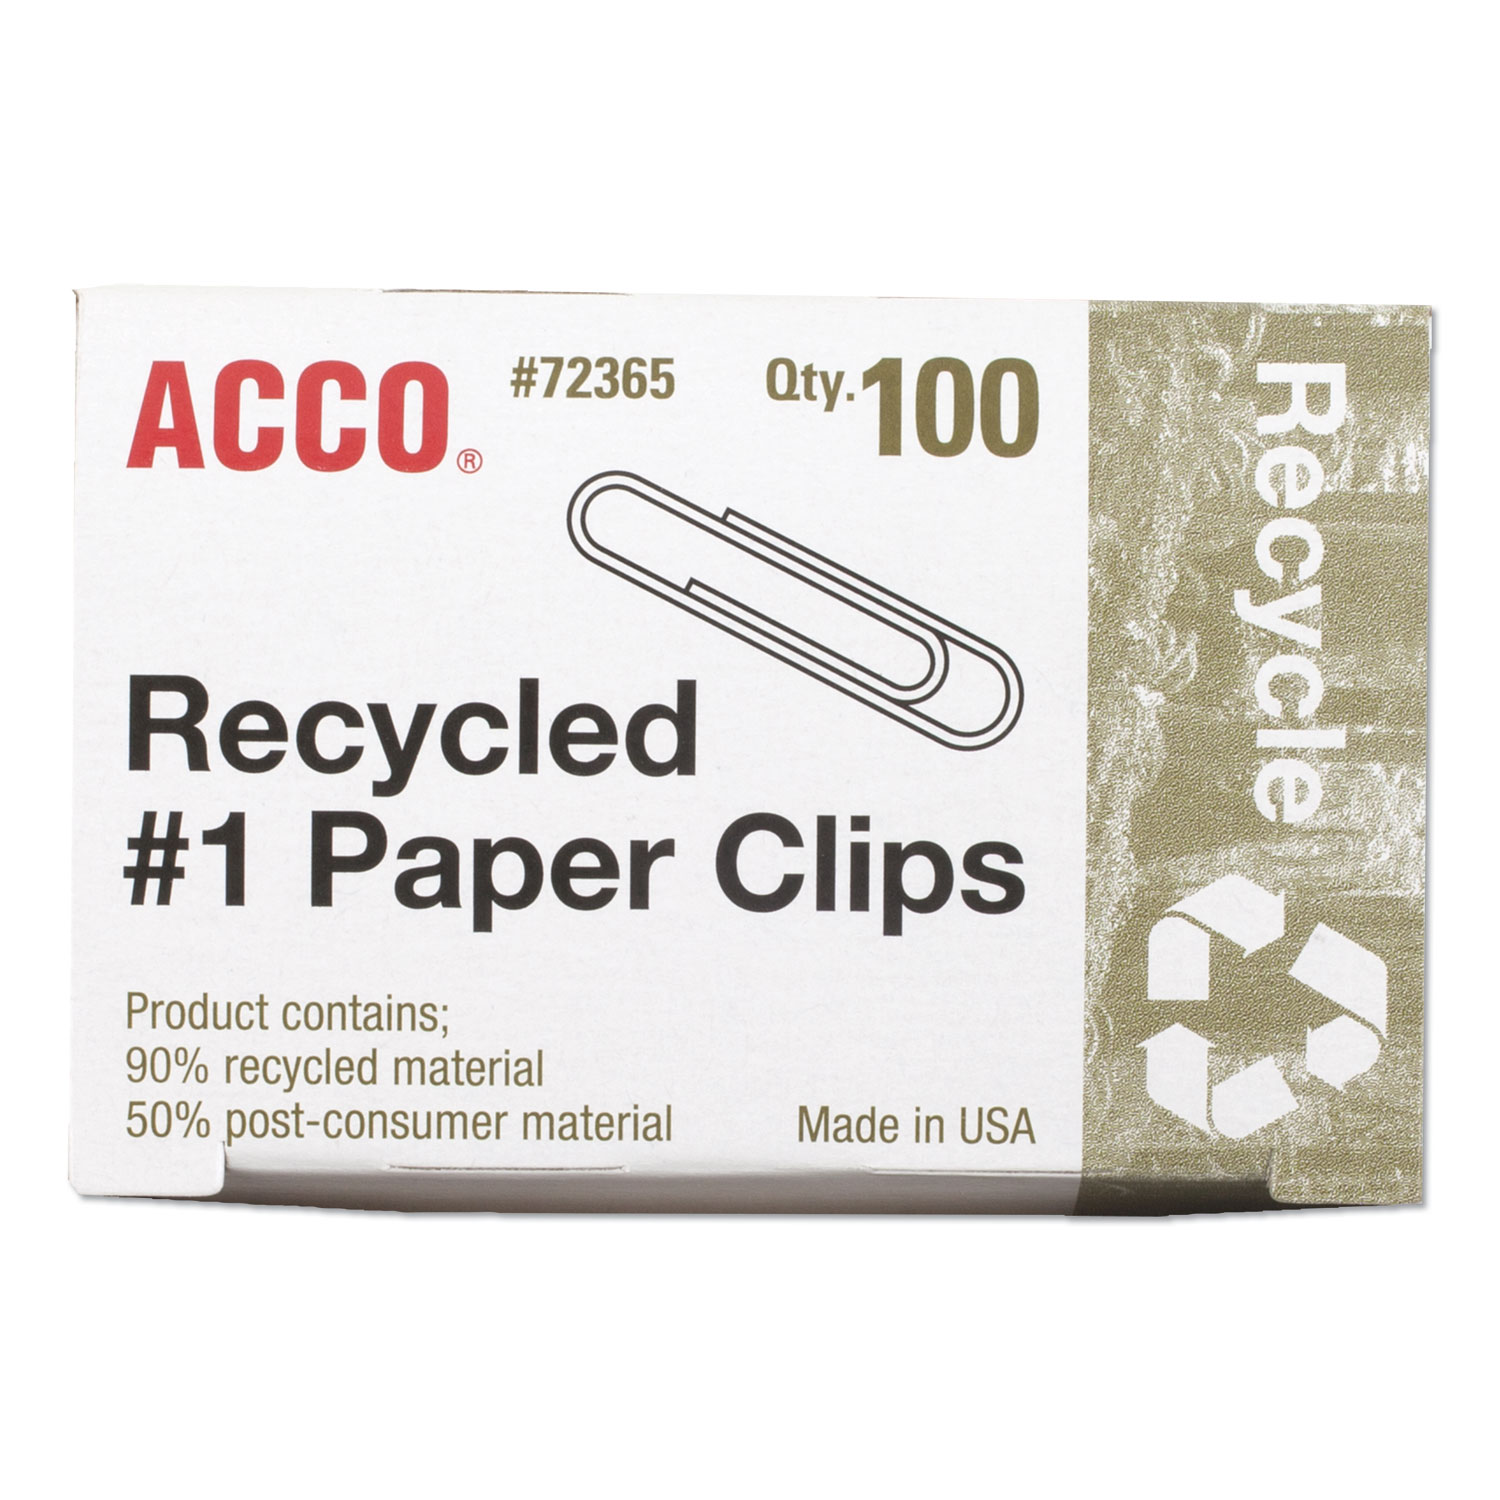 ACCO Smooth Standard Paper Clip, #3, Silver, 100/Box, 10 Boxes